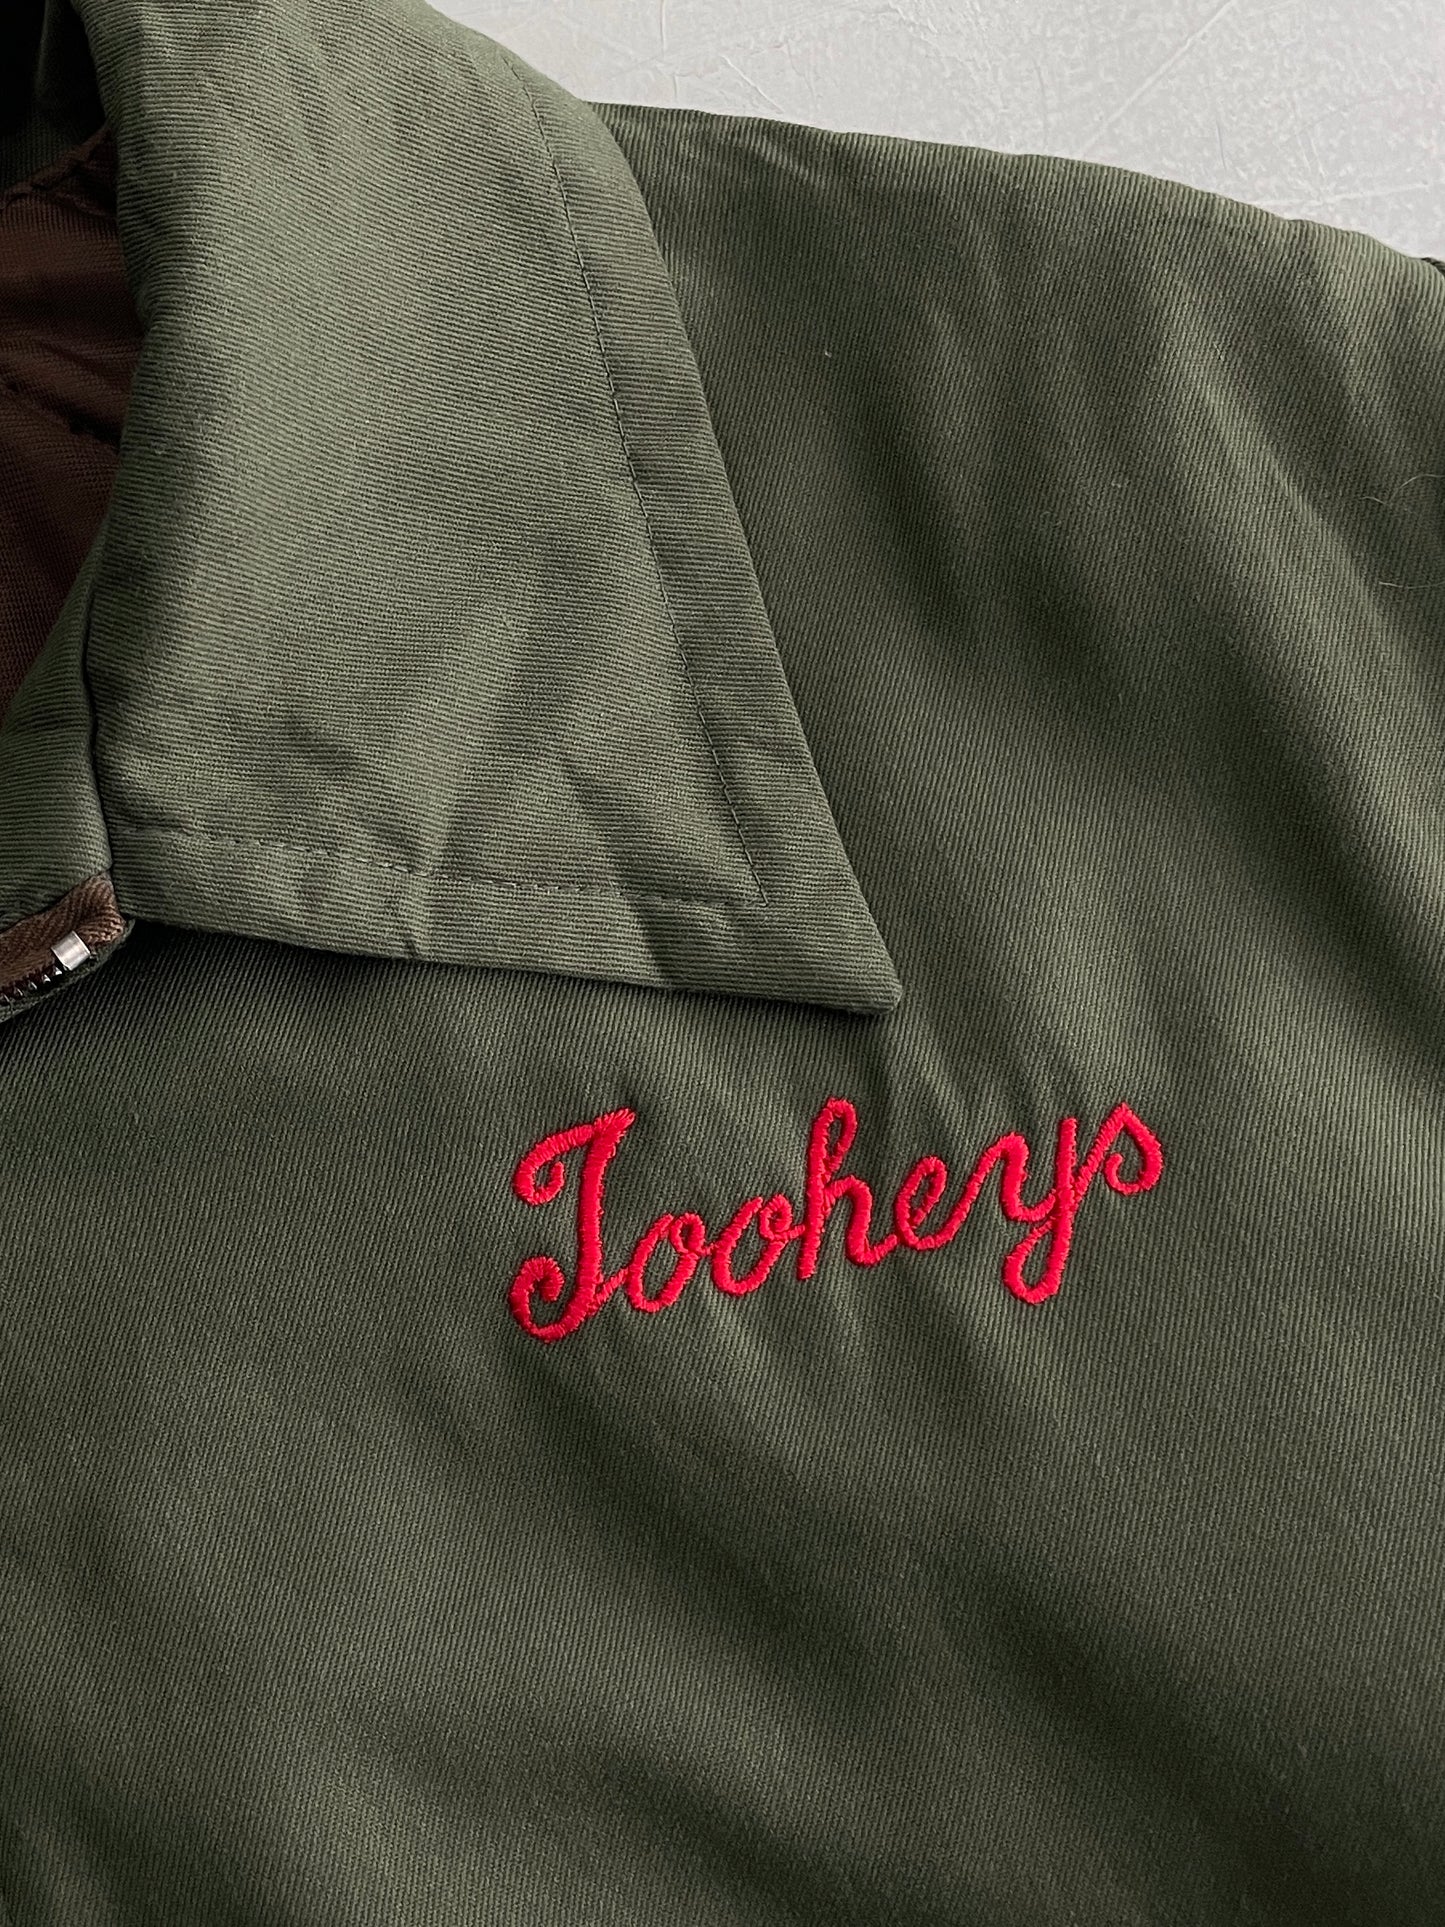 Tooheys Mechanic Jacket [L]